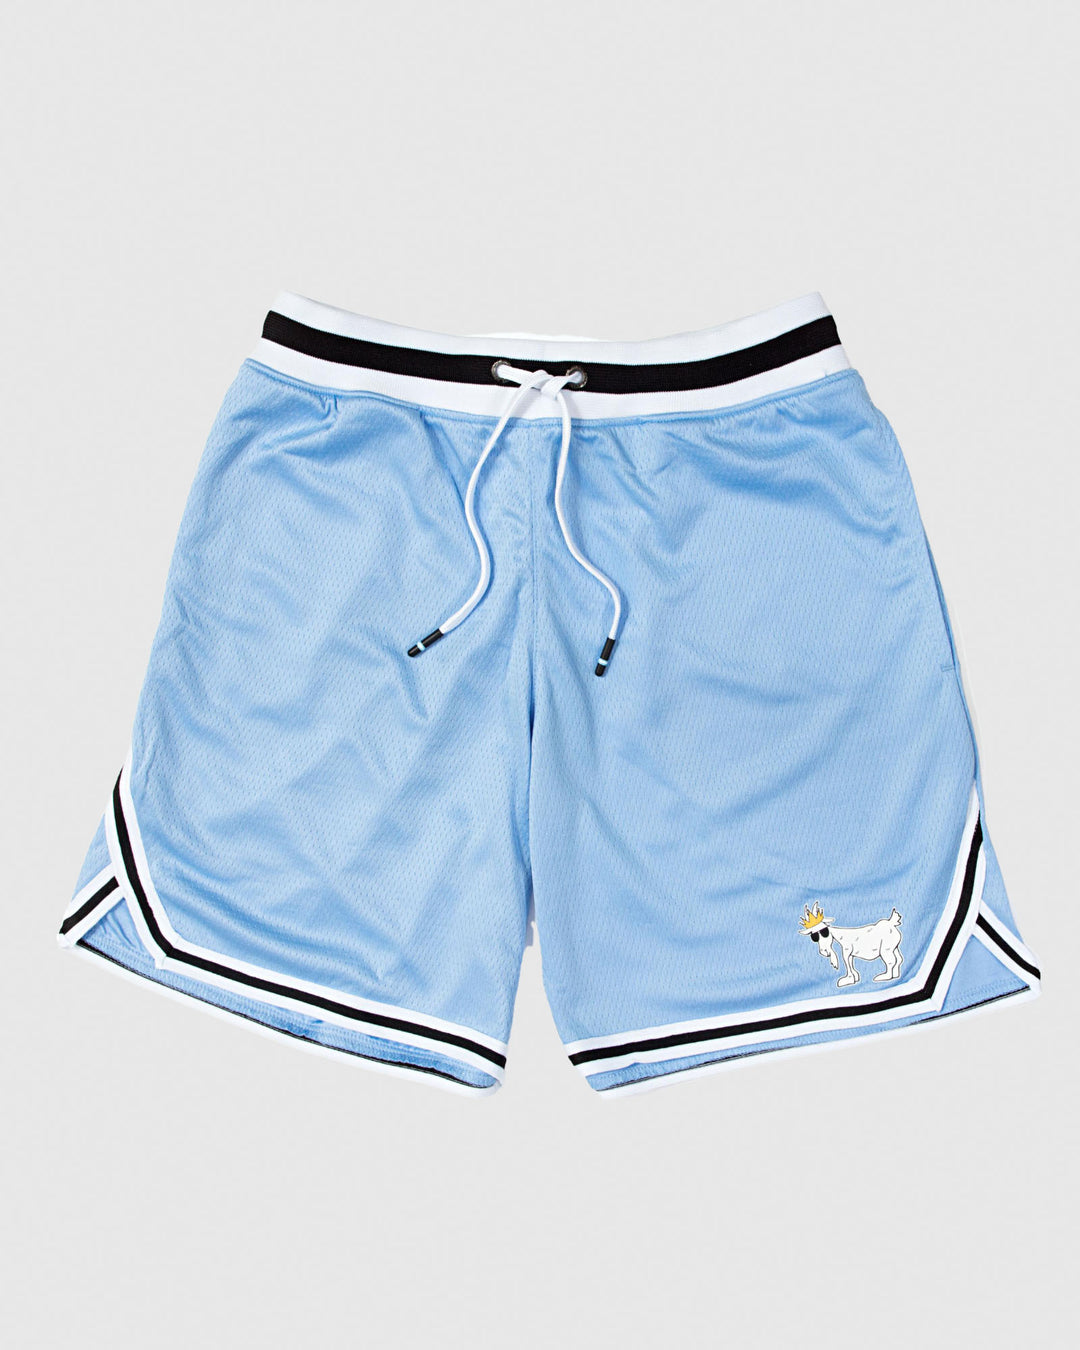 Carolina blue mesh shorts with black and white waistband#color_carolina-blue